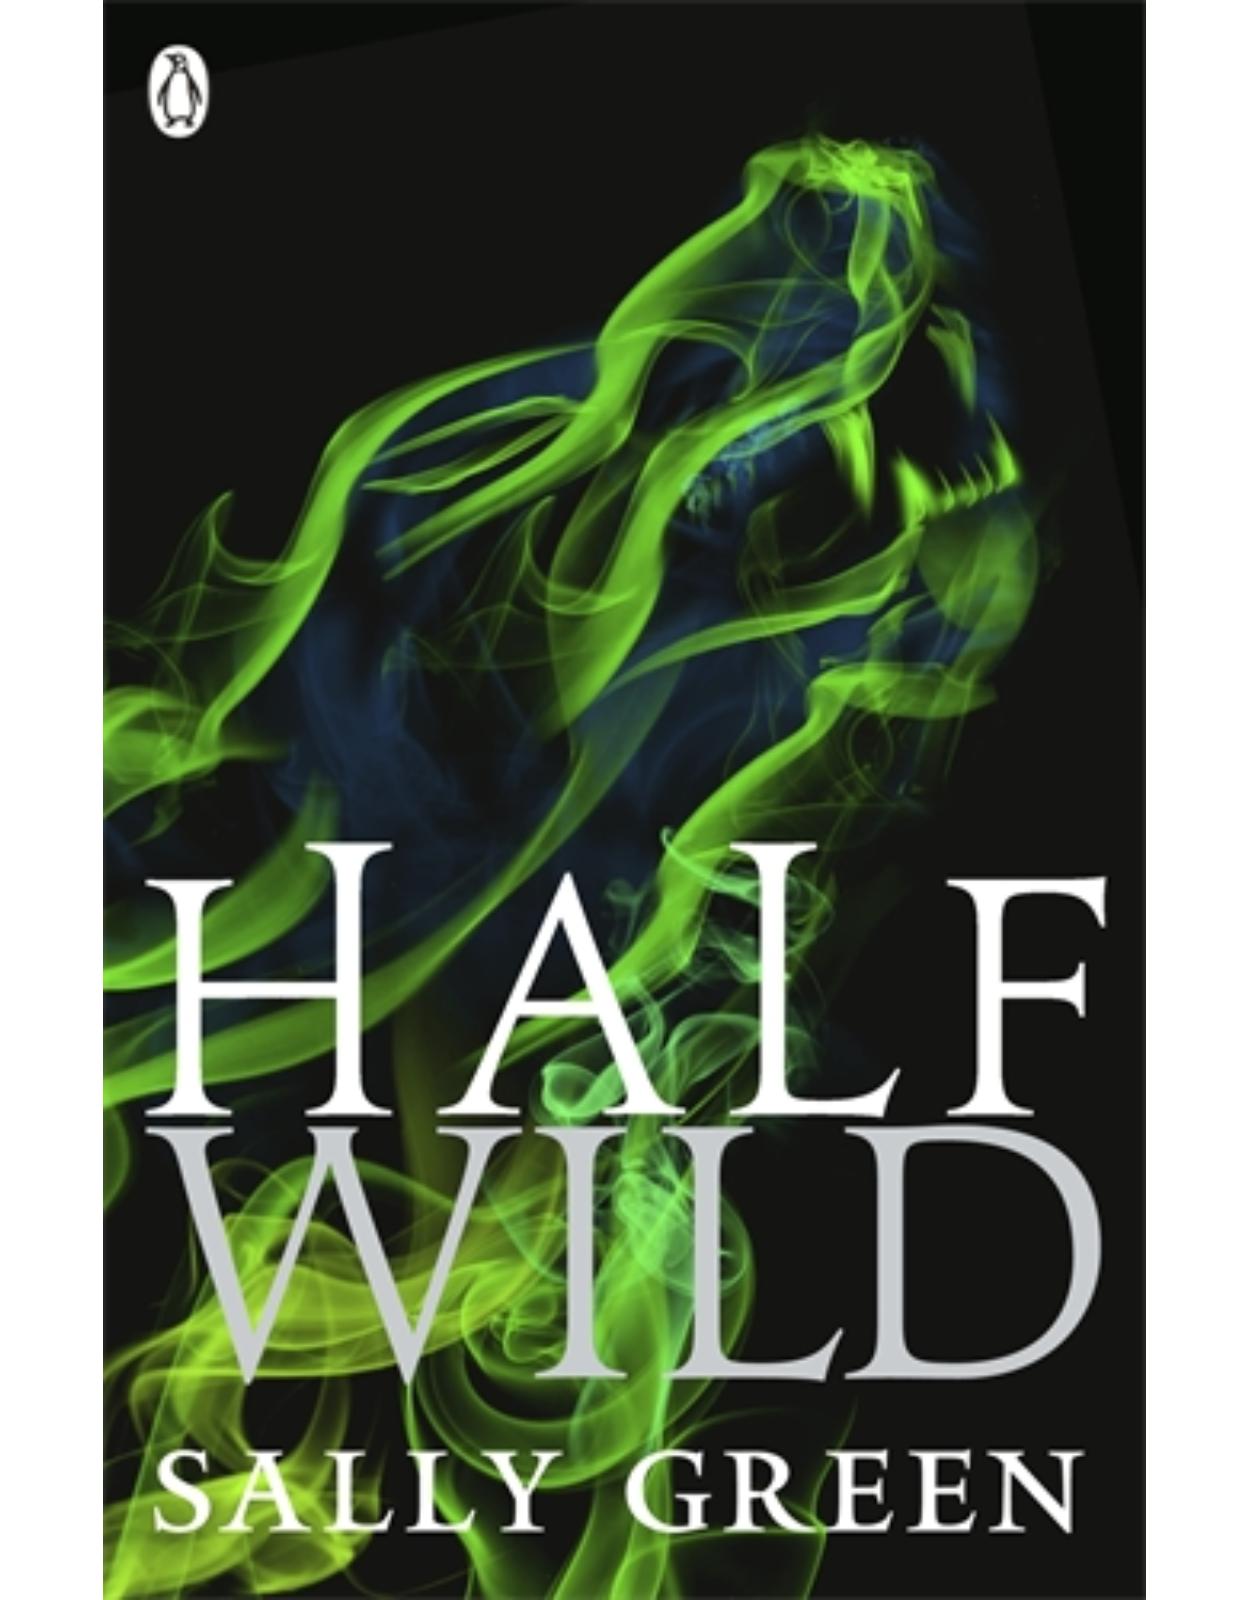 Half Wild (Half Bad)